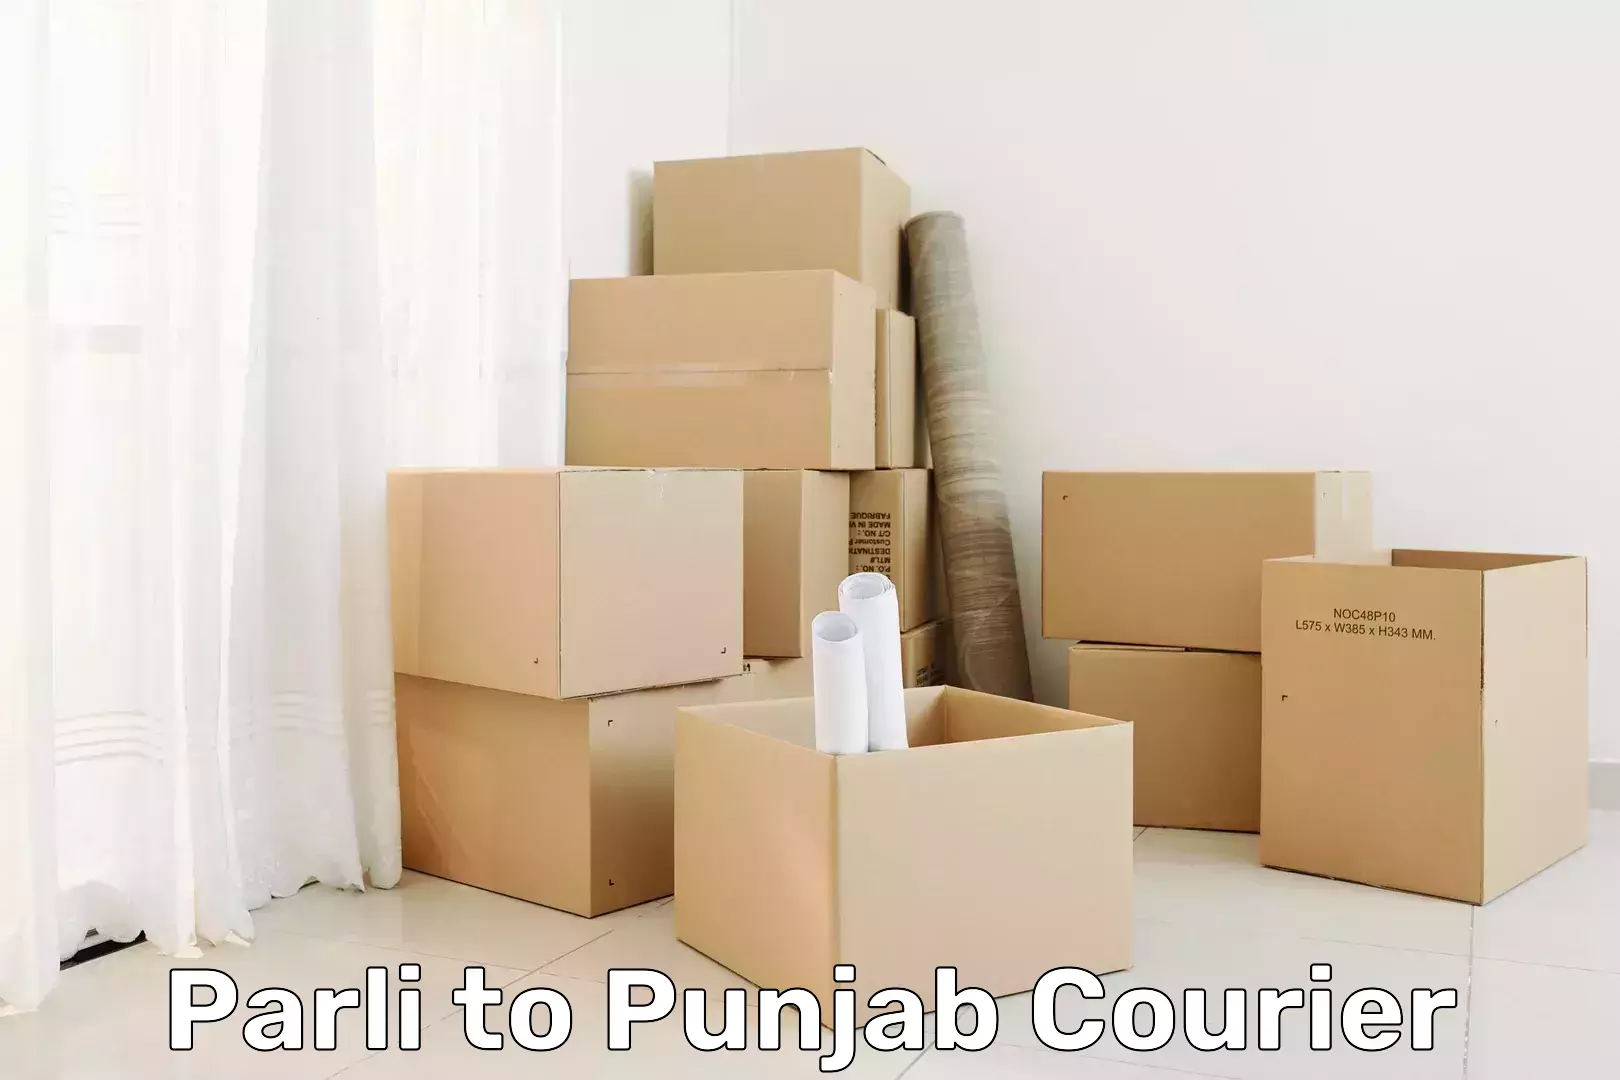 Quick dispatch service Parli to Punjab